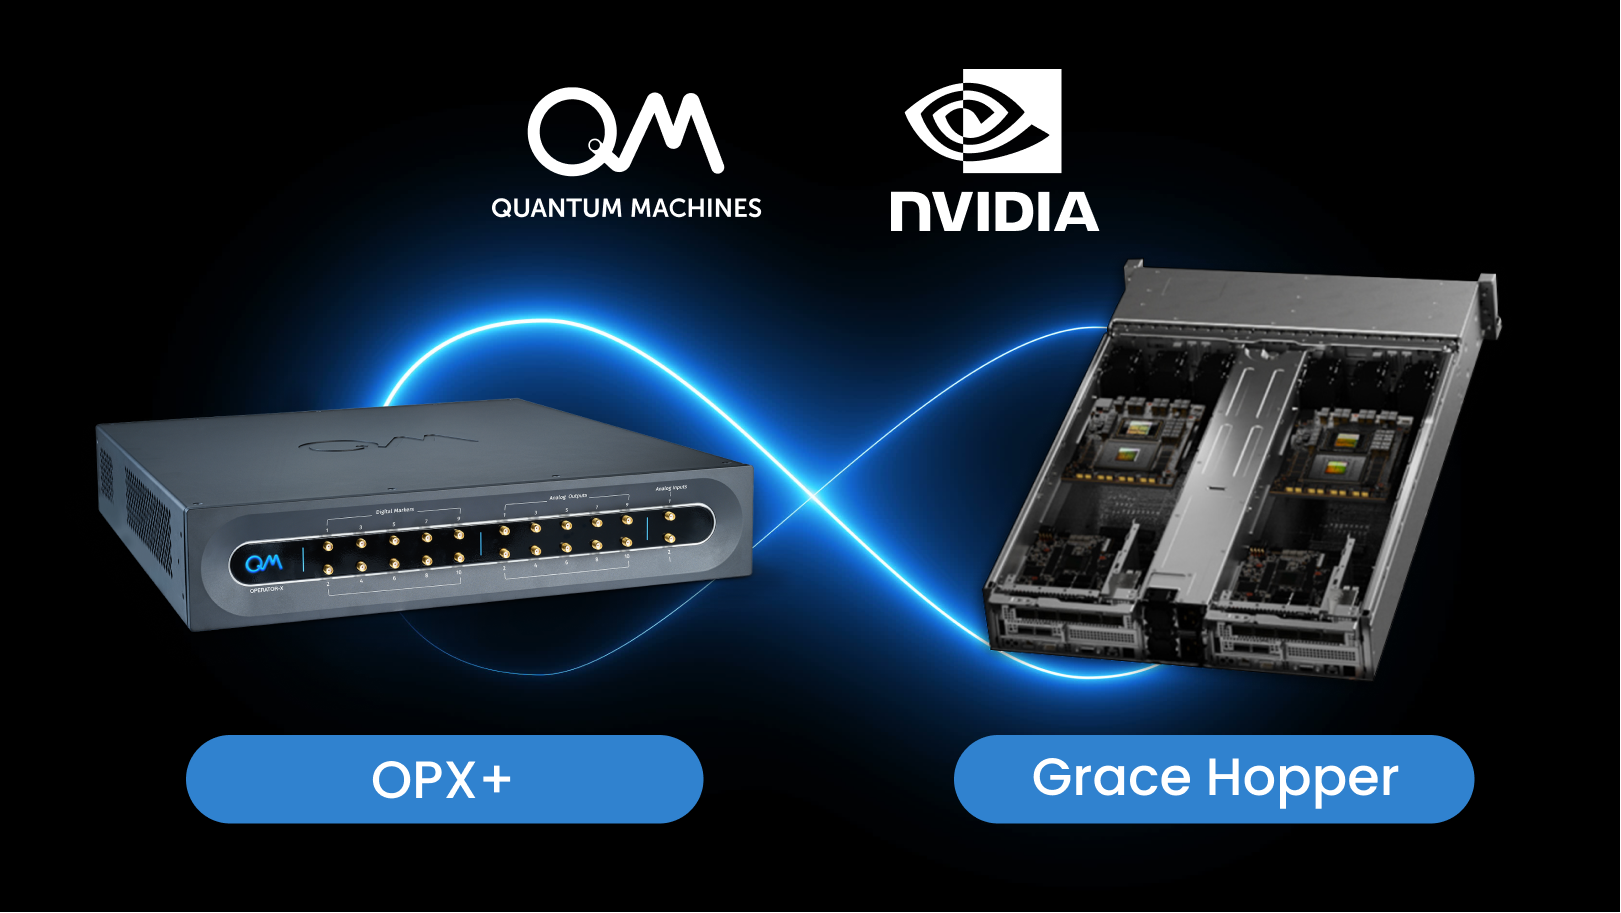 Nvidia partners with Quantum Machines to combine classical and quantum machines